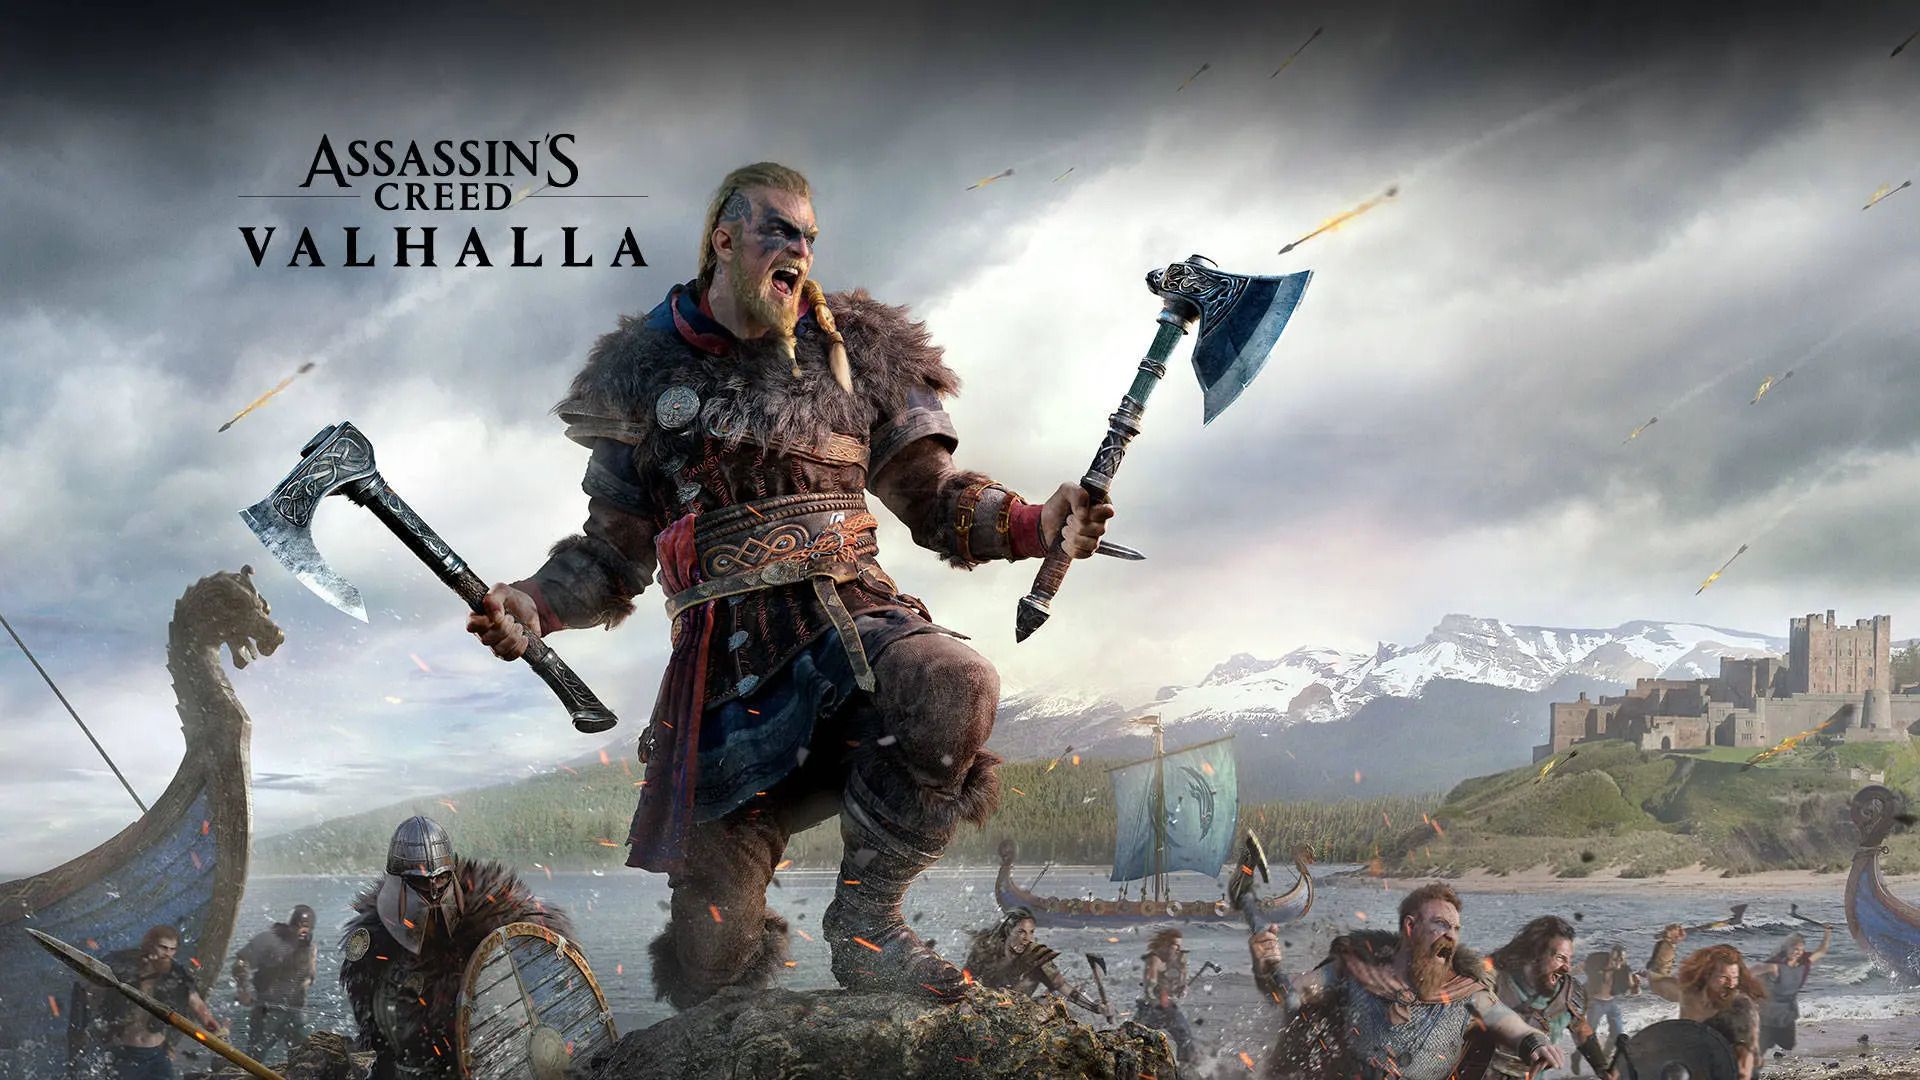 Assassin's Creed Valhalla: Siege of Paris DLC Download Size